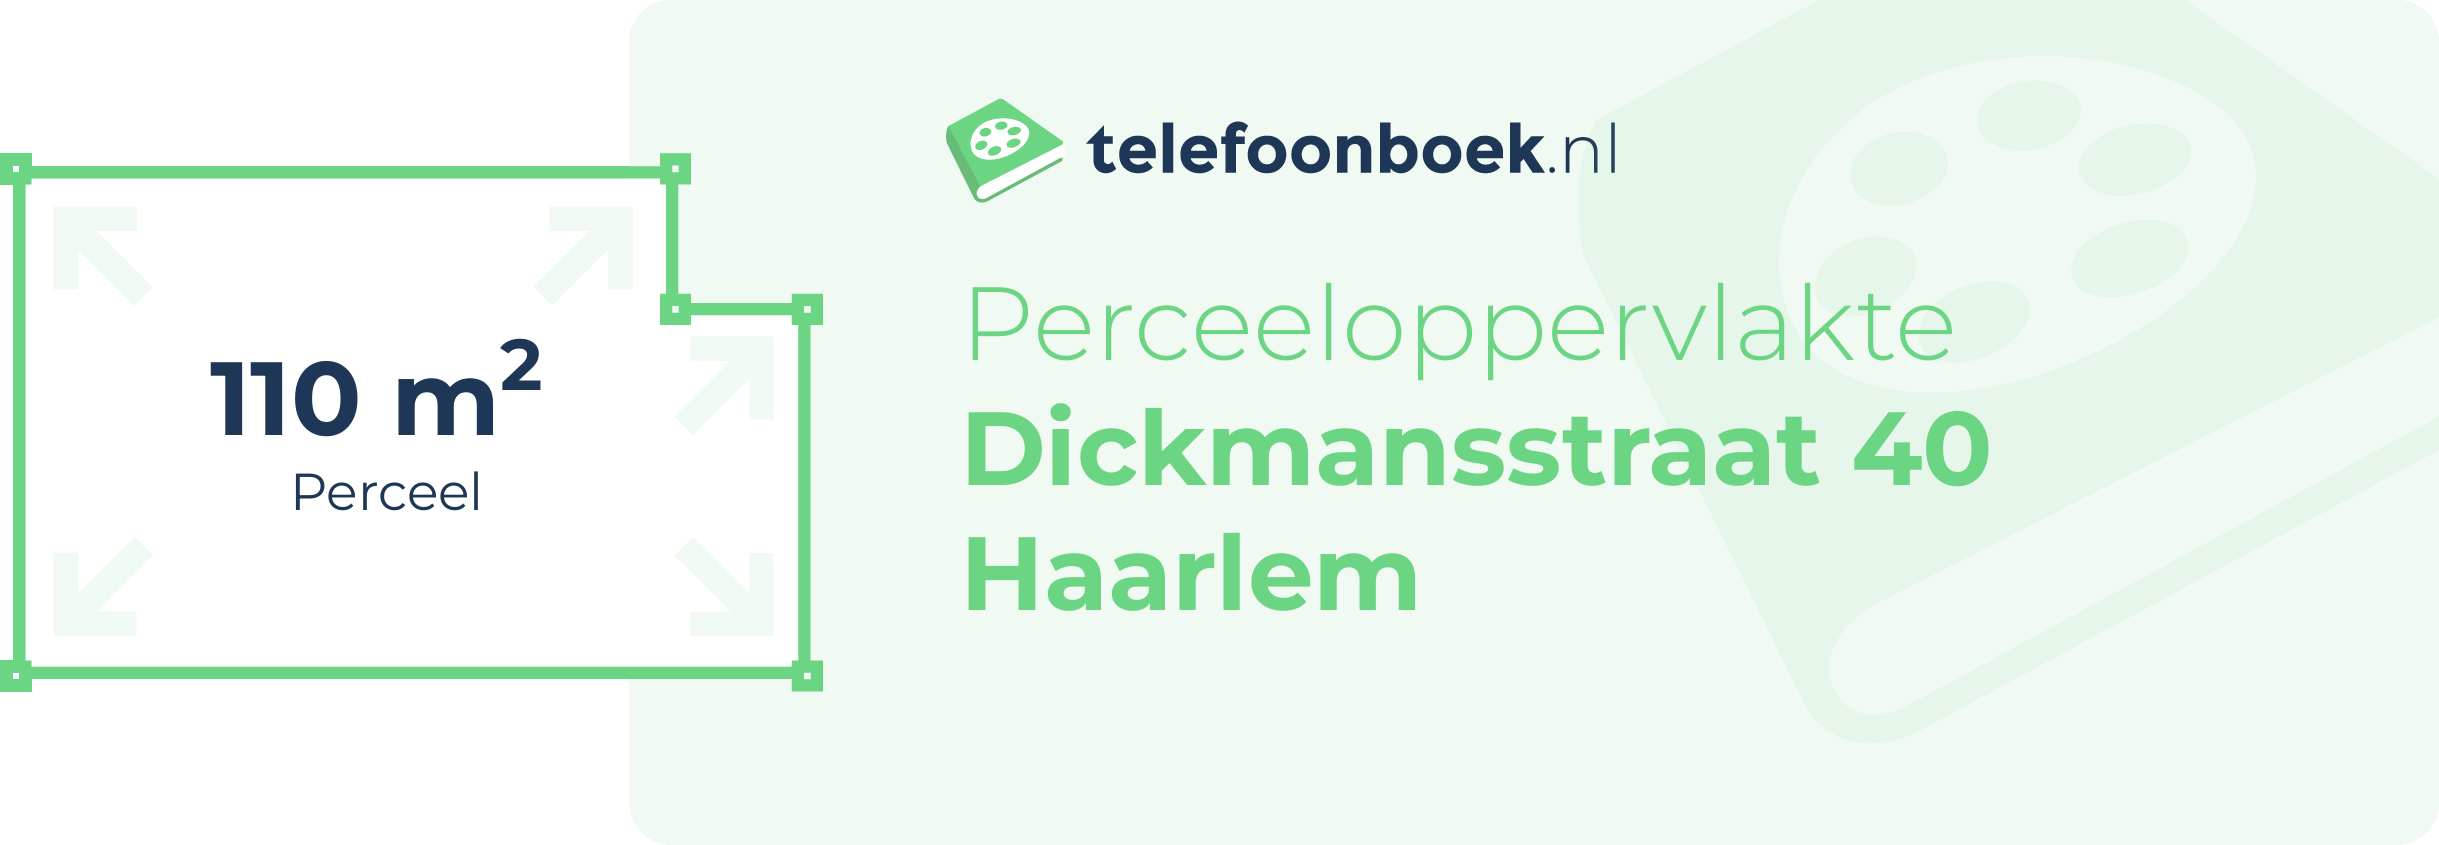 Perceeloppervlakte Dickmansstraat 40 Haarlem